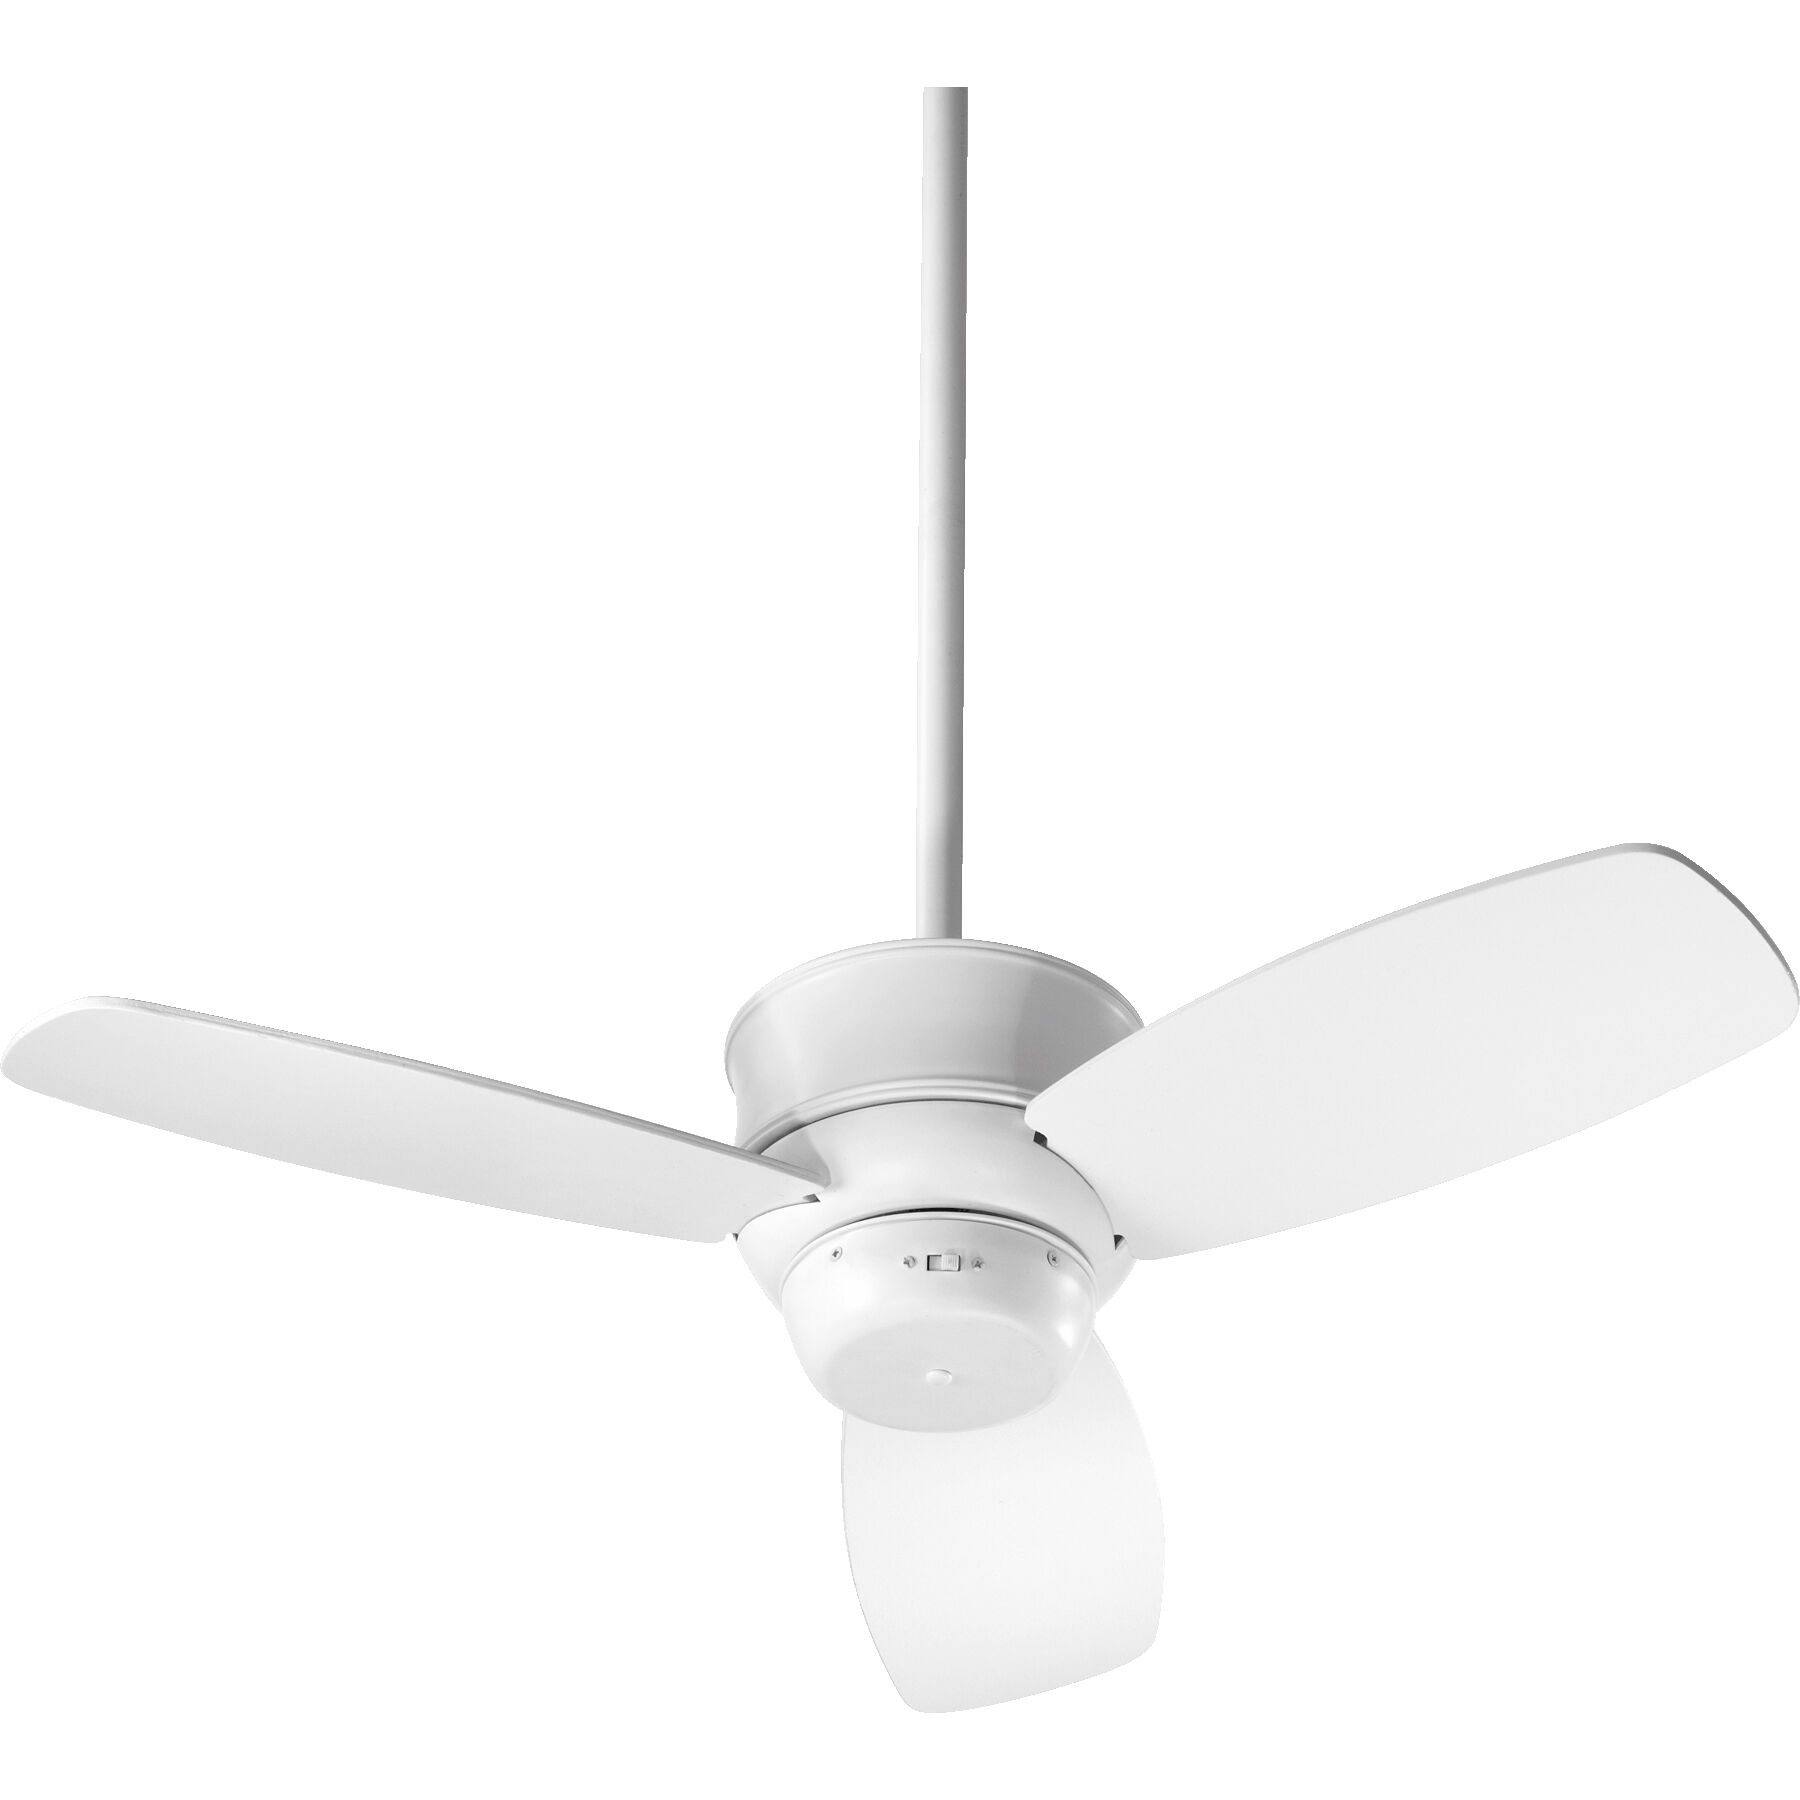 Gusto 32.00 inch Indoor Ceiling Fan